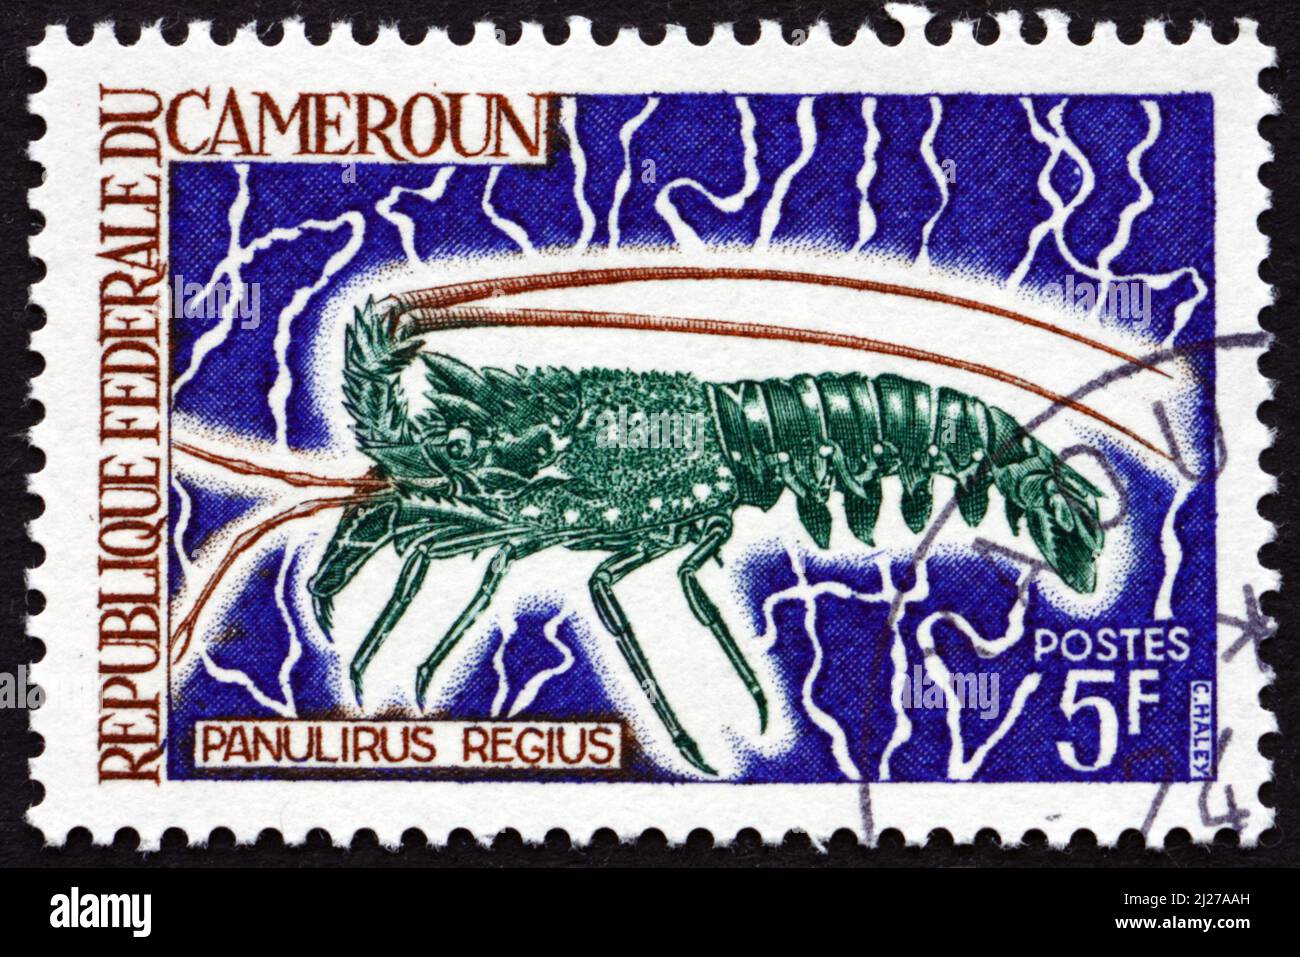 CAMEROON - CIRCA 1968: a stamp printed in Cameroon shows Royal Spiny Lobster, Panulirus Regius, circa 1968 Stock Photo